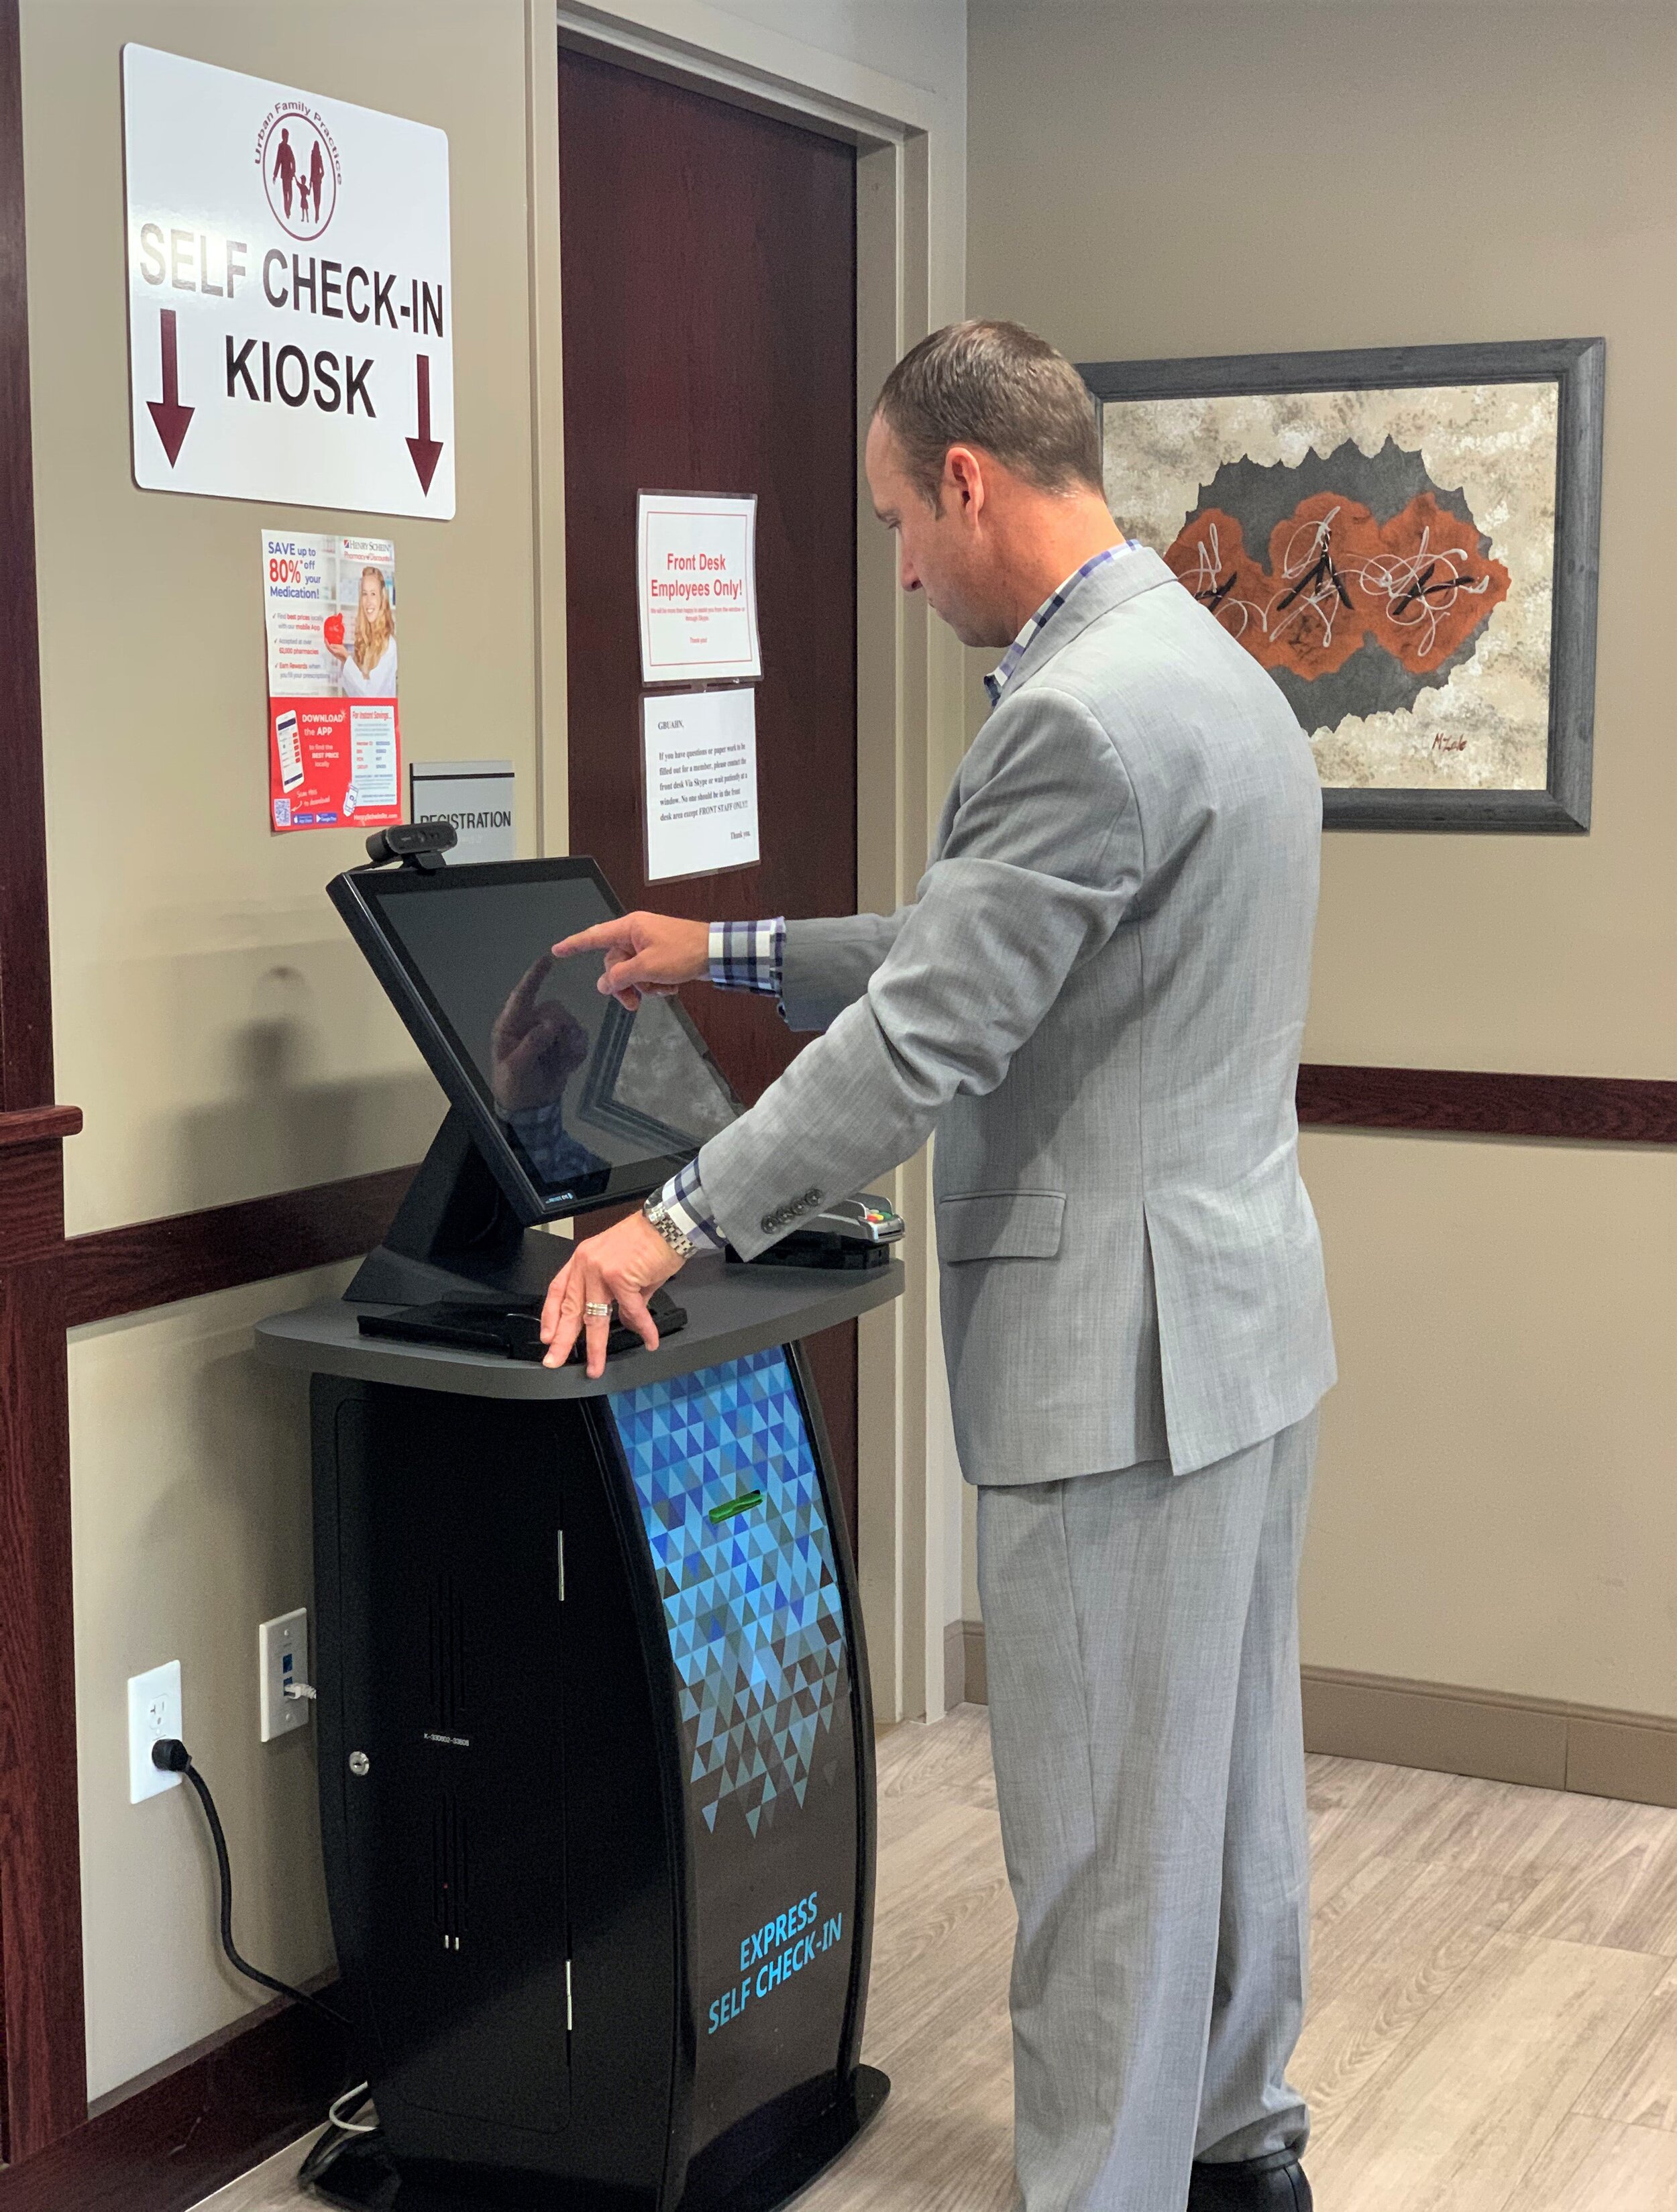  Jason Isbrandt, Director of Strategic Physician Partnerships for G-Health Enterprises, demonstrates the efficiency of a MEDENT self-check-in kiosk at GBUAHN in Buffalo, New York. 